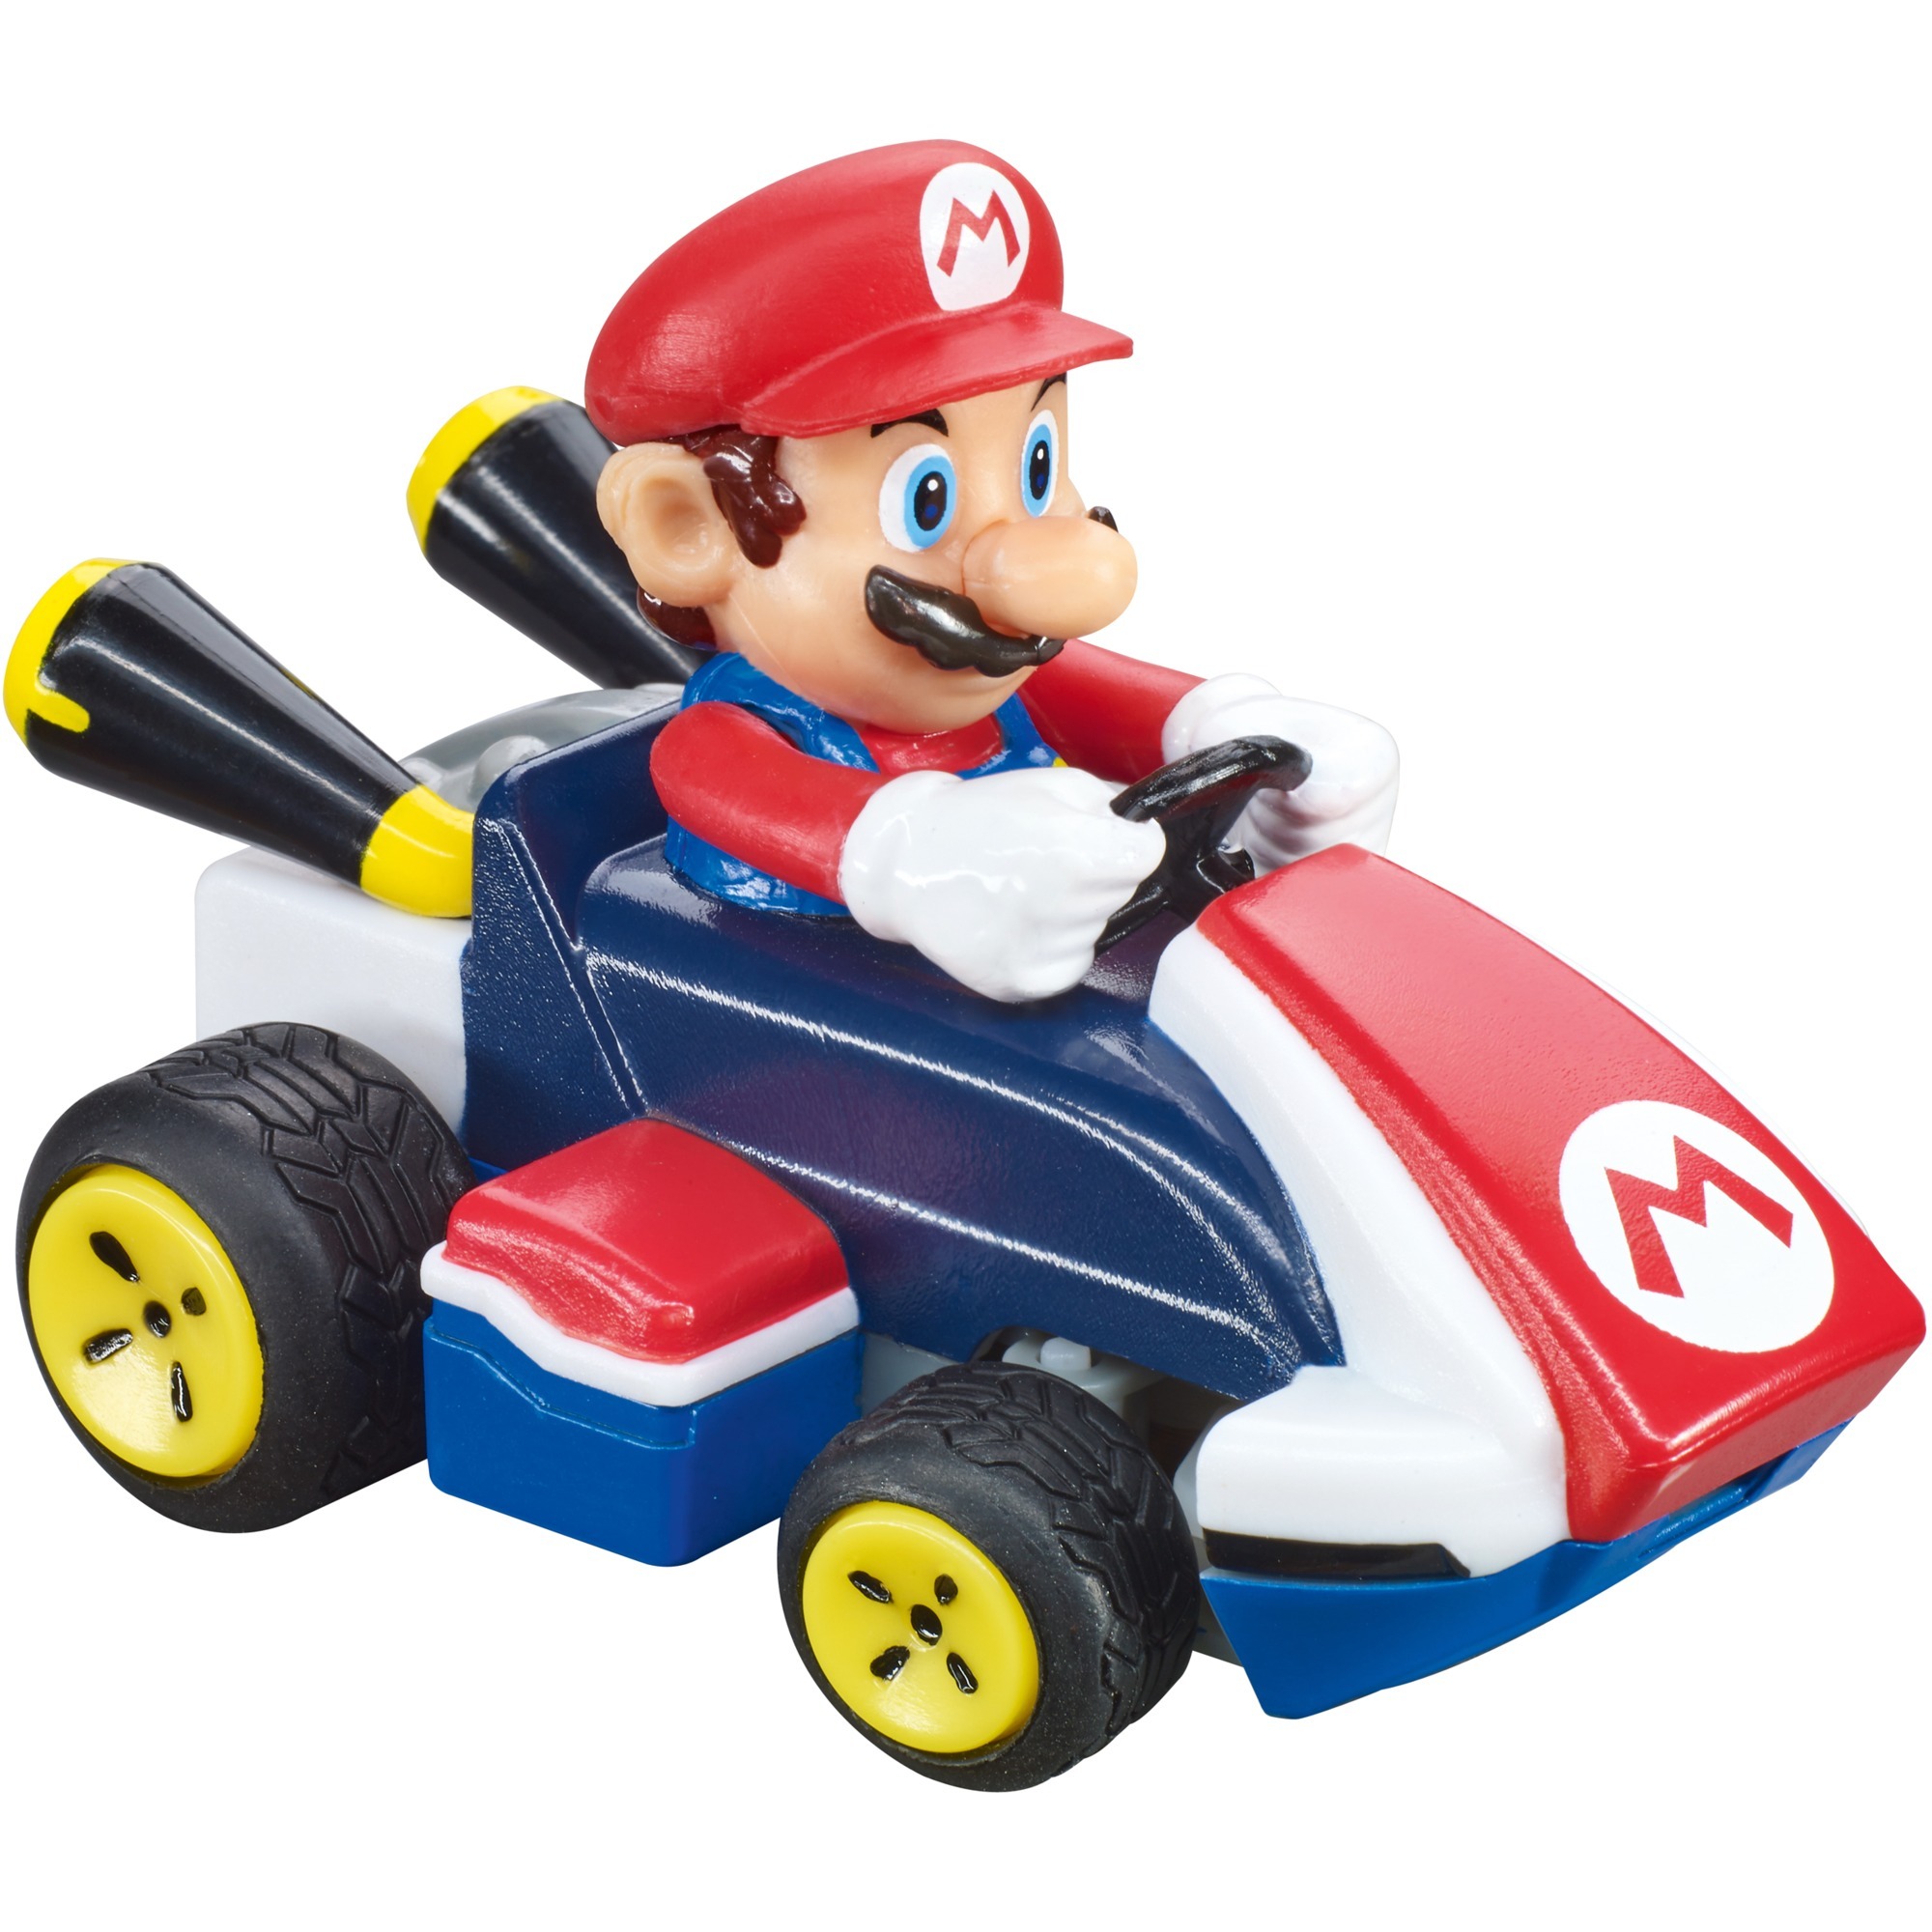 Image of Alternate - RC Mario Kart Mini RC - Mario online einkaufen bei Alternate